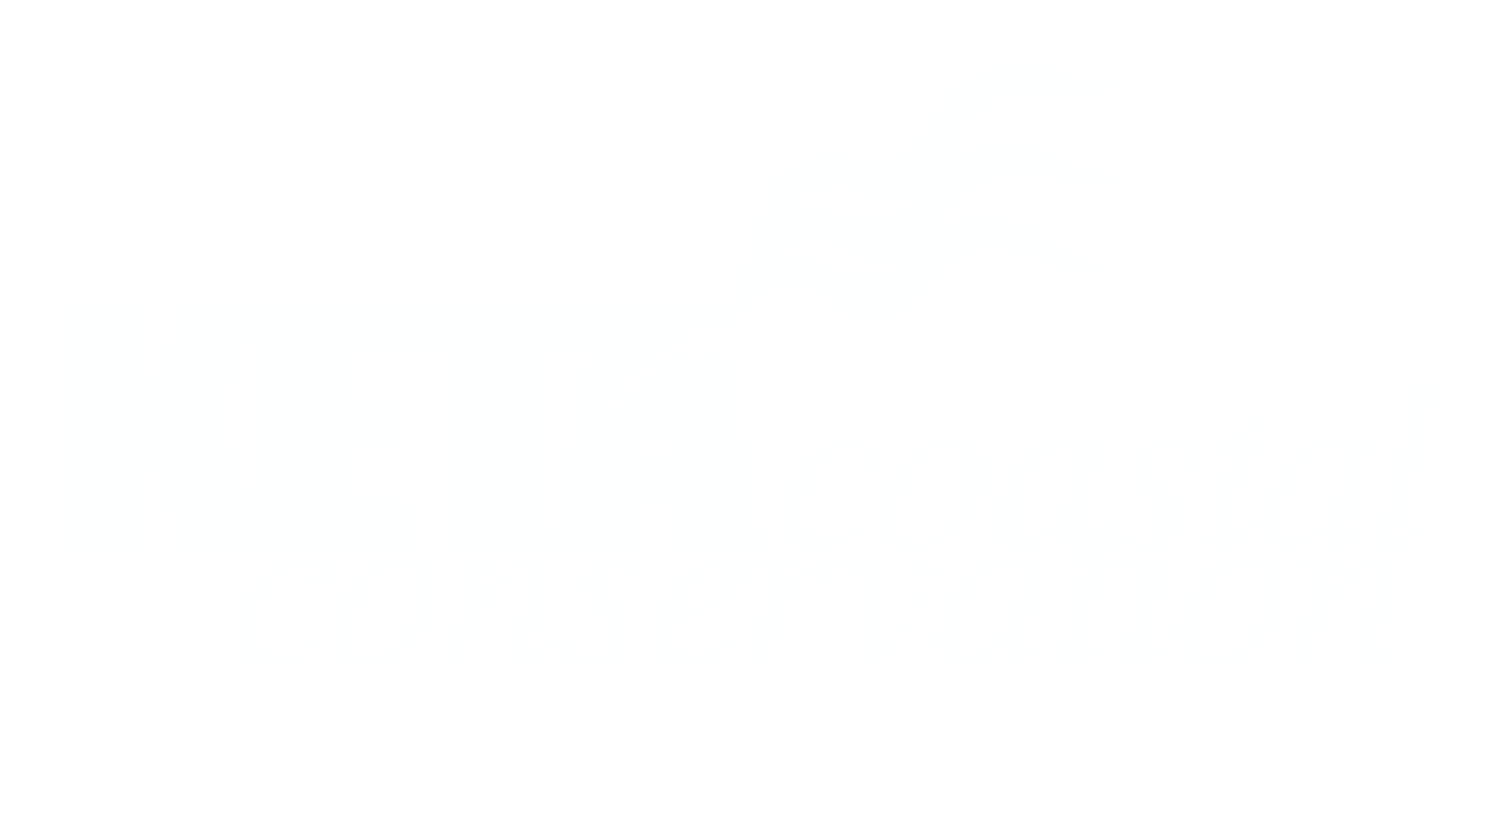 Keta Coastal Conservation